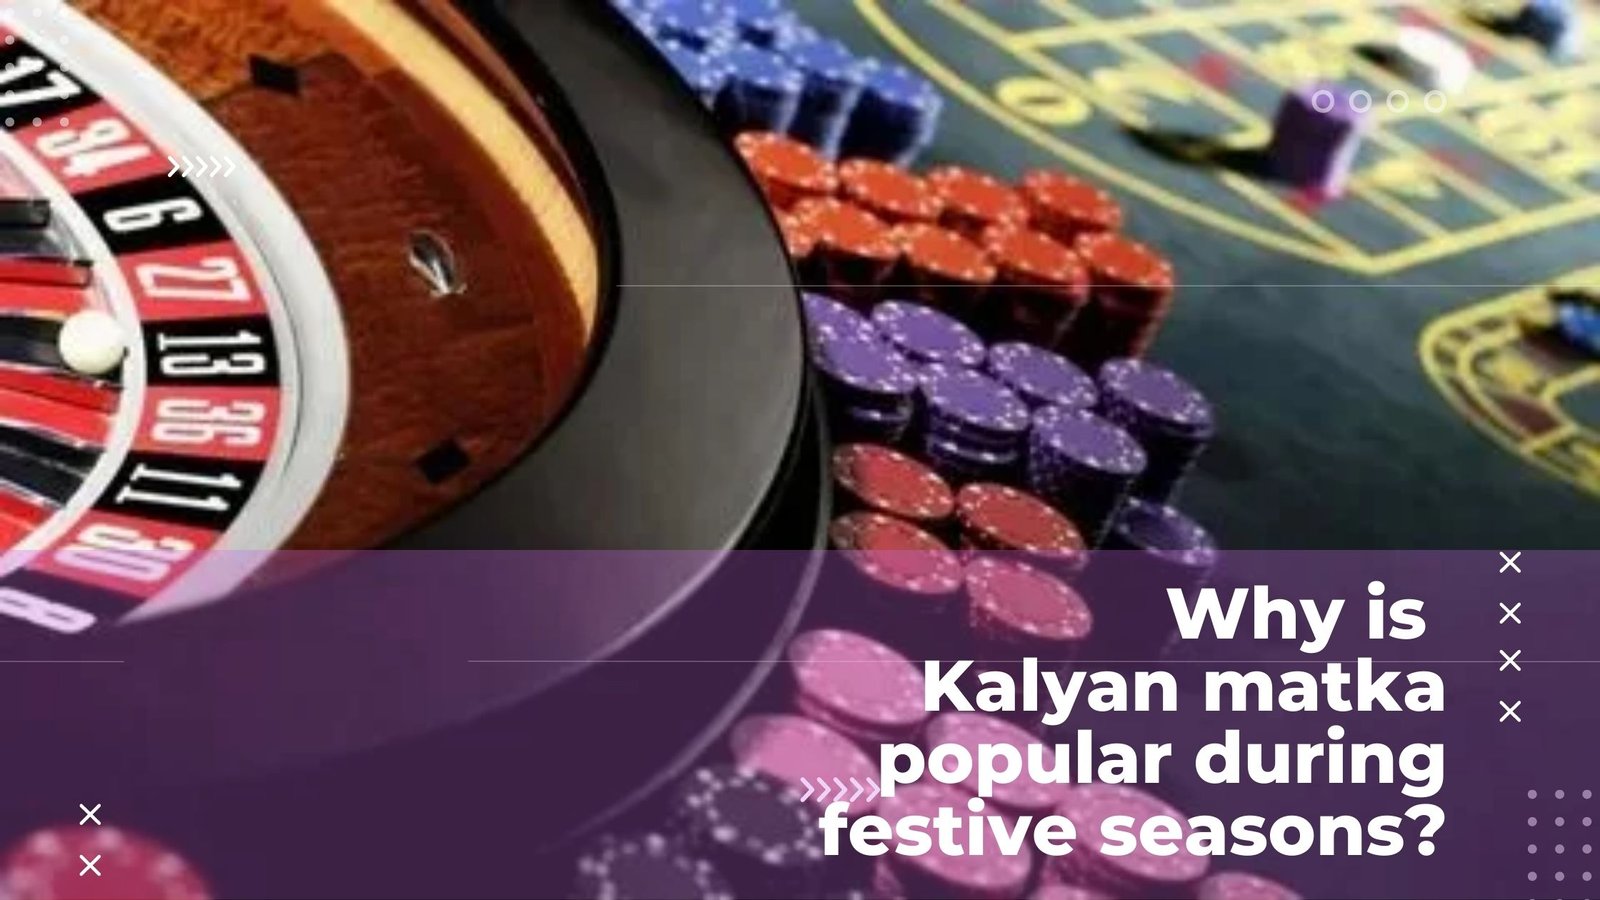 Why is Kalyan matka popular during festive seasons?